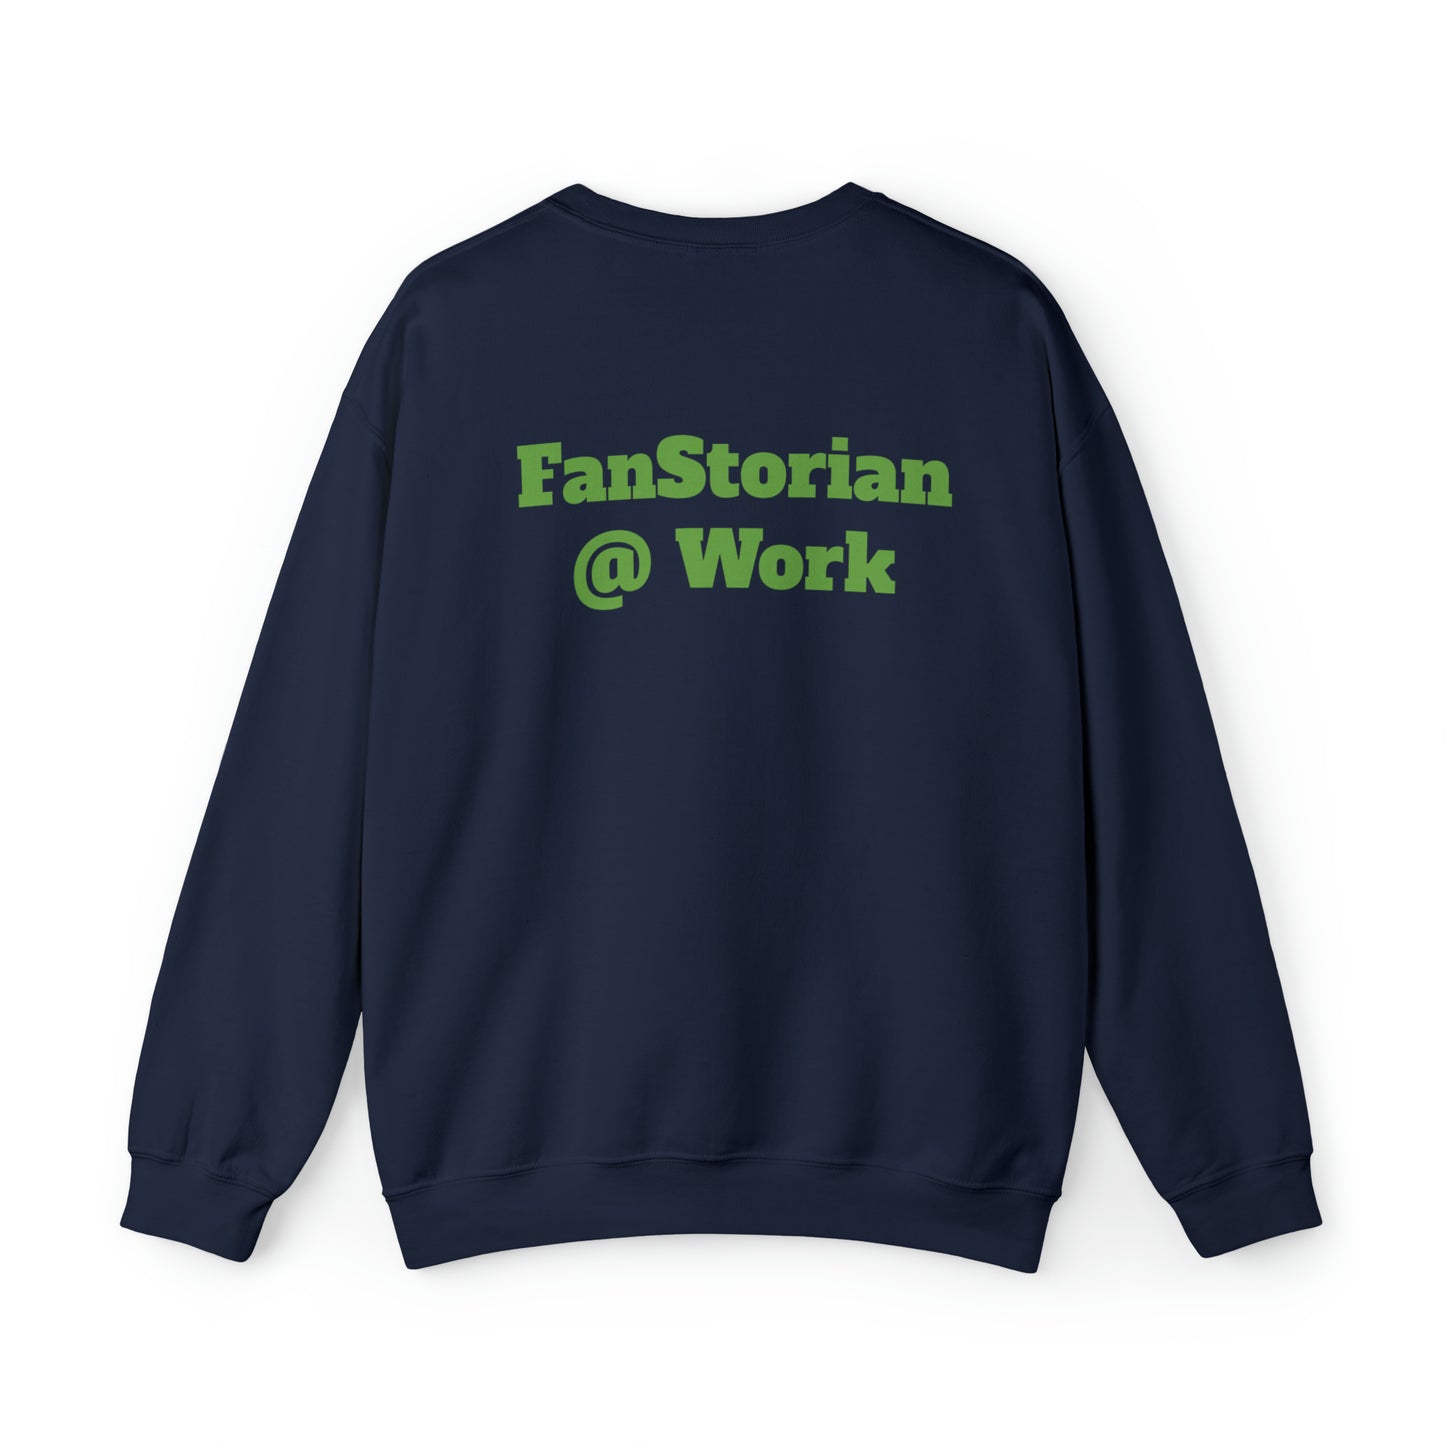 FanStorian @ Work. Crewneck Sweatshirt